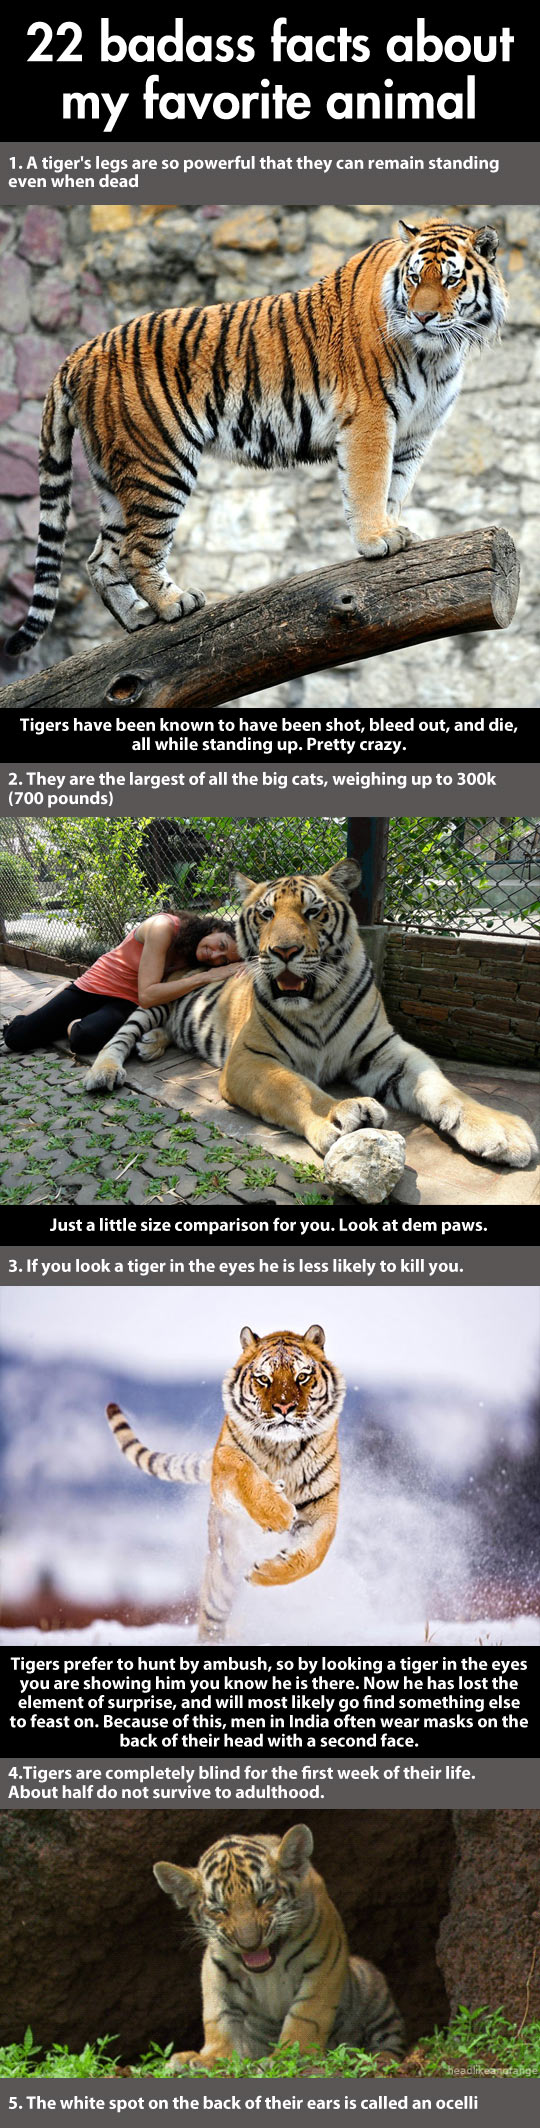 Badass facts about a tiger...